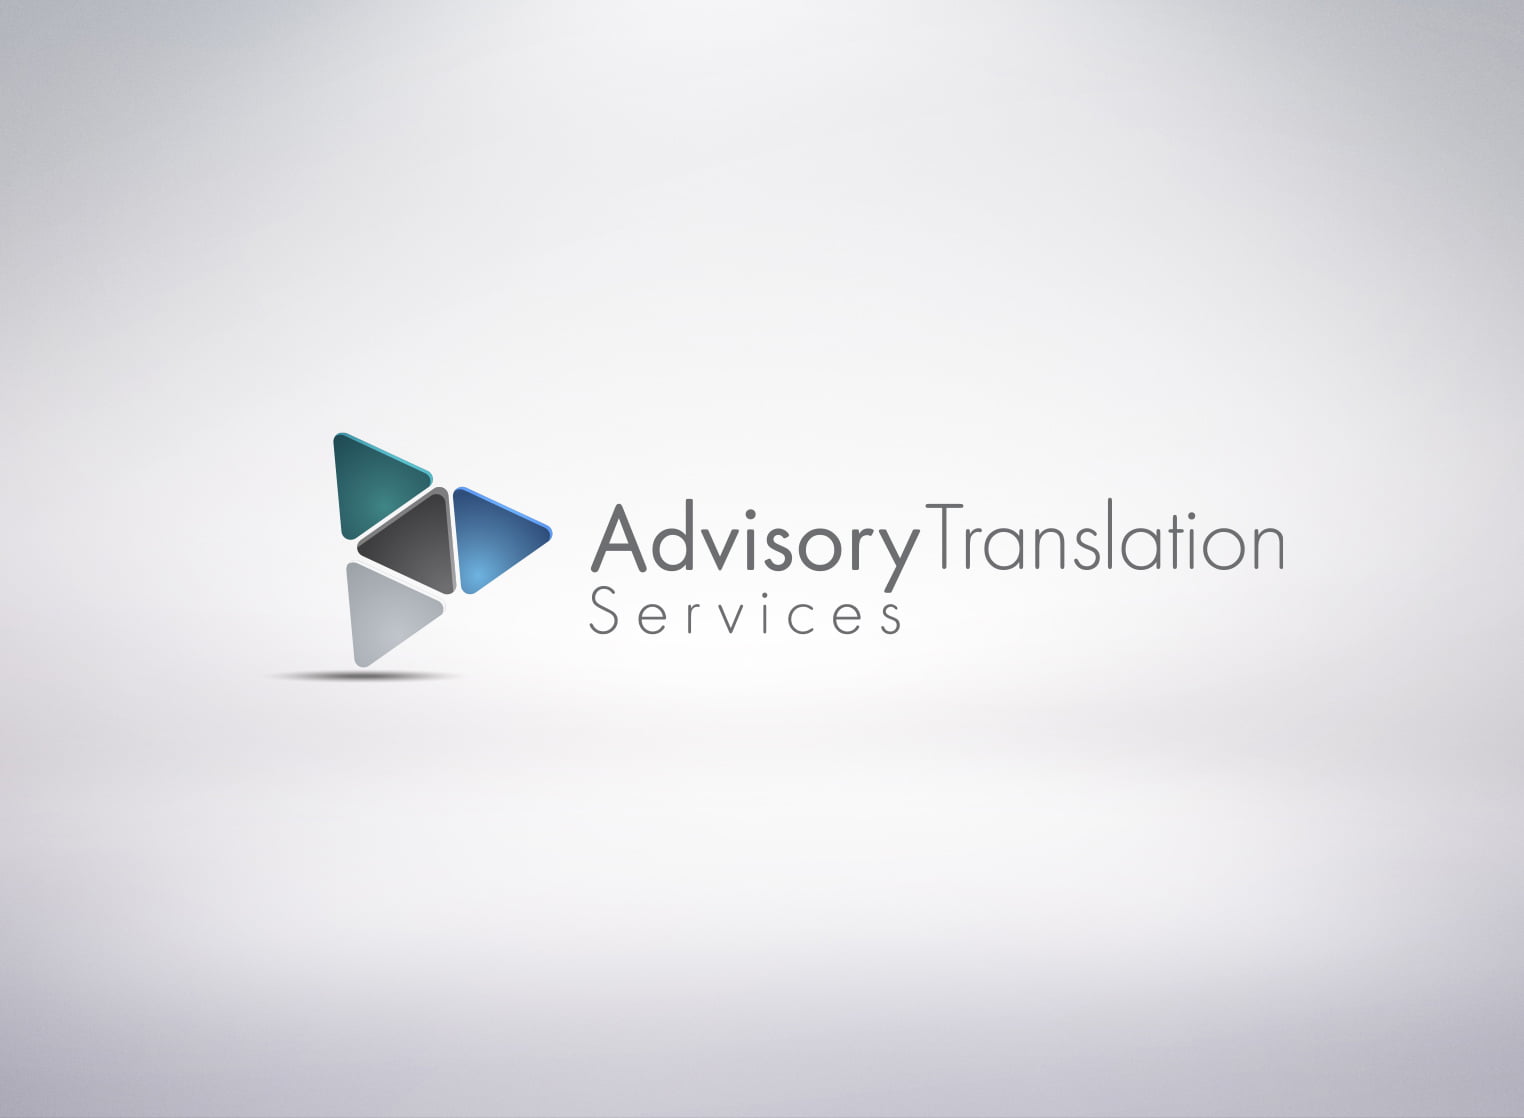 Advisory Translation Services Logo | Creative Elements Consulting